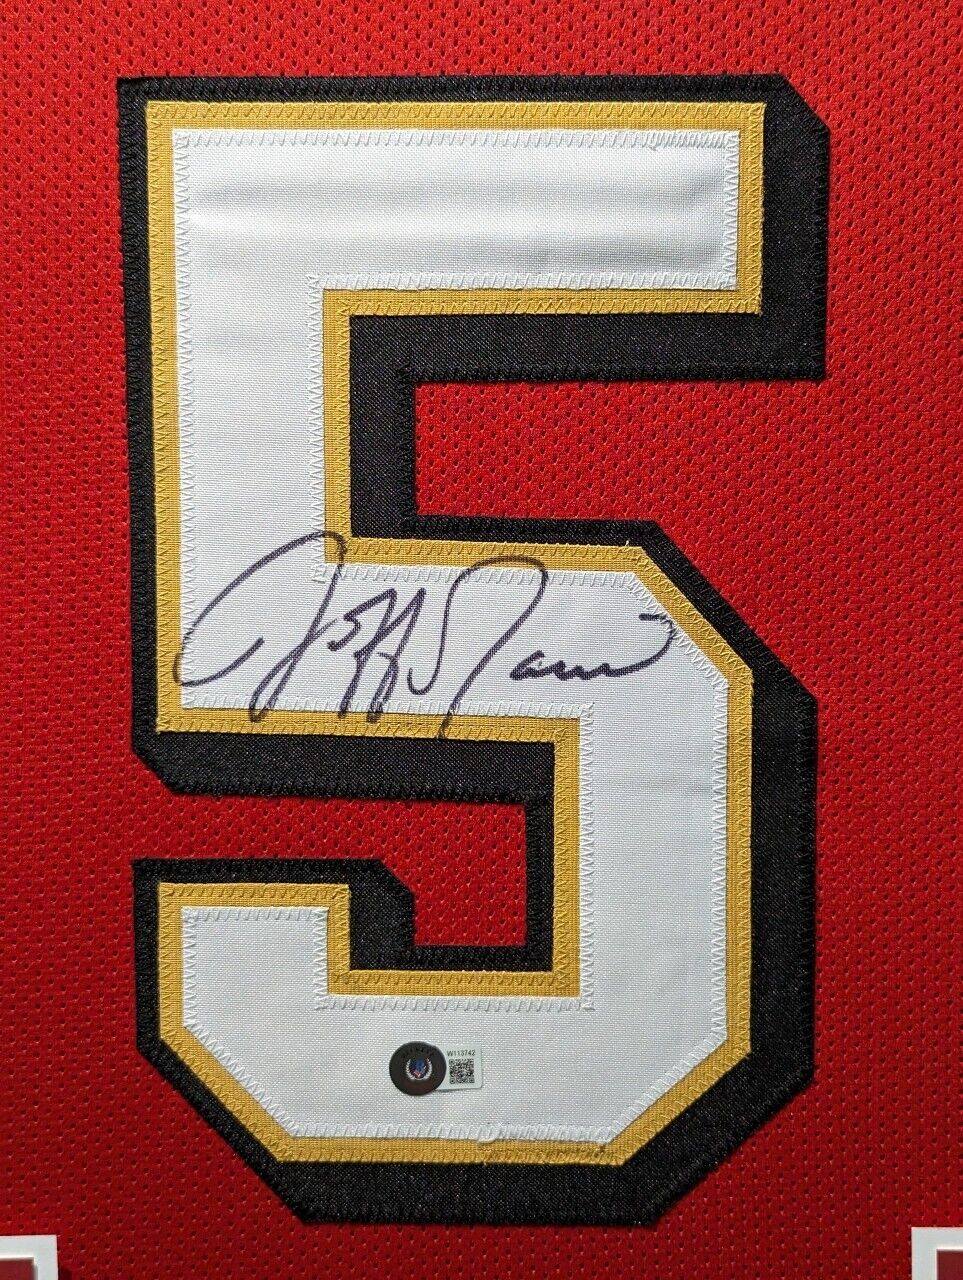 MVP Authentics Framed San Francisco 49Ers Jeff Garcia Autographed Signed Jersey Beckett Holo 405 sports jersey framing , jersey framing